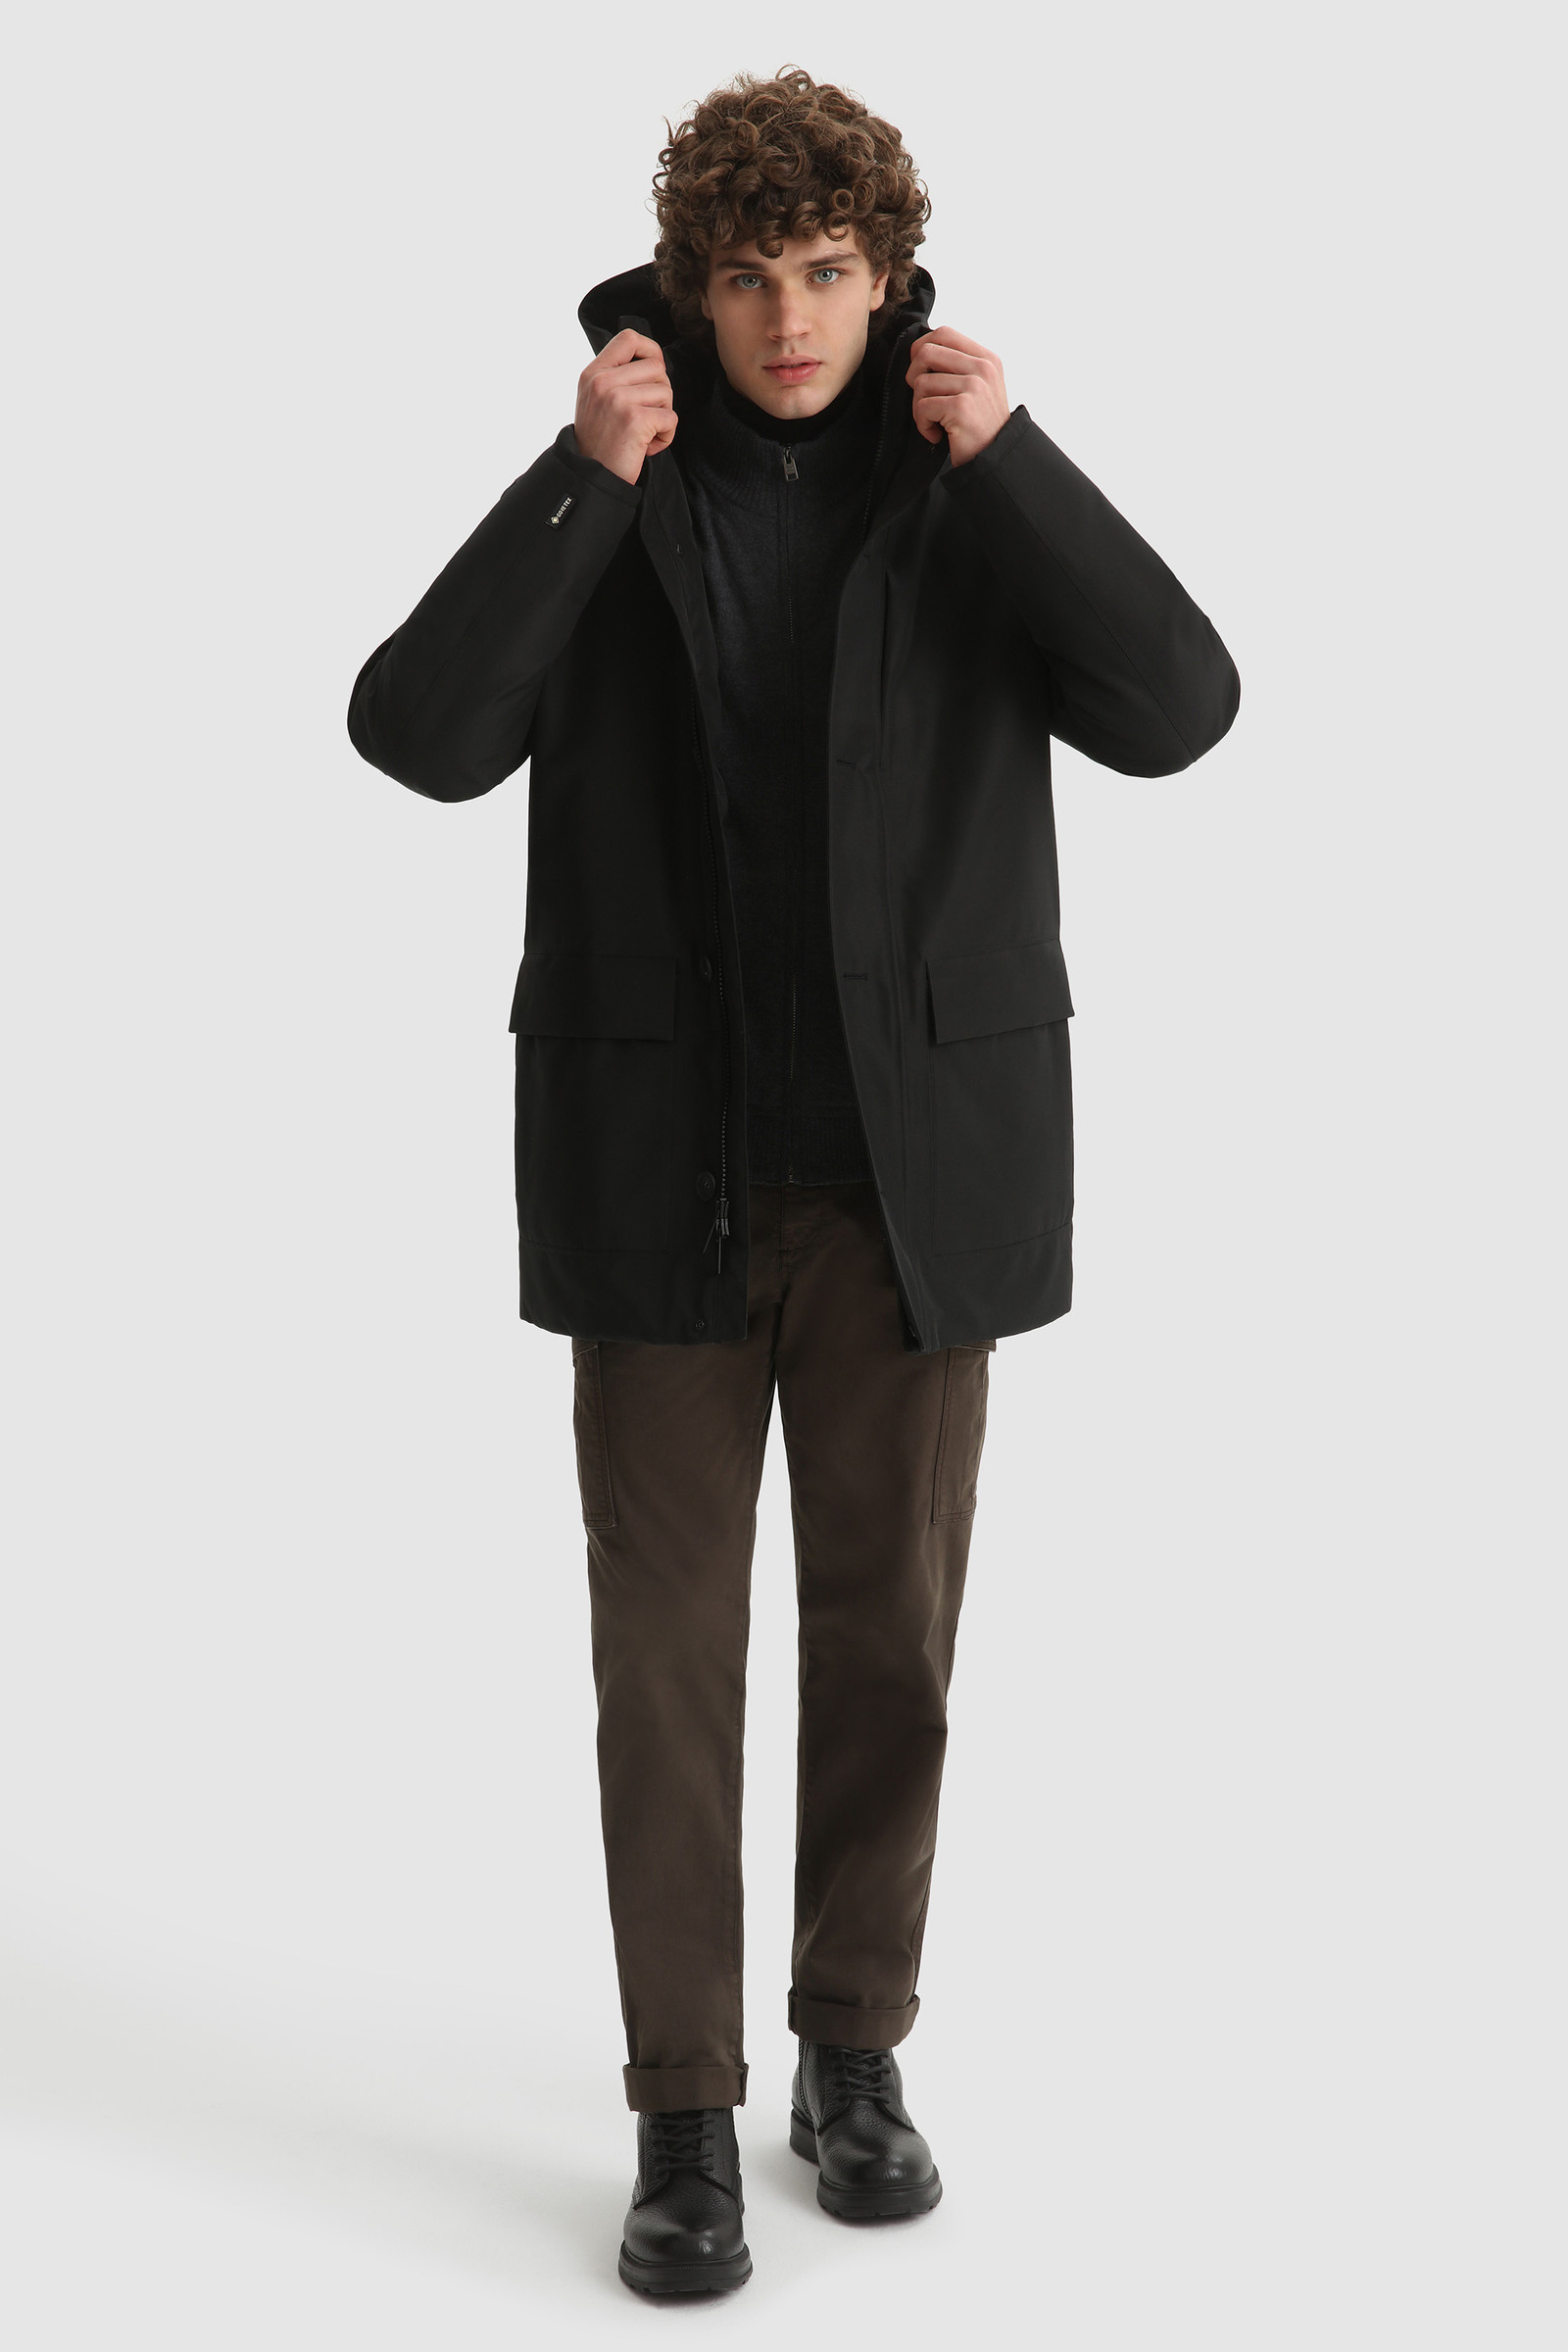 Men's GORE-TEX Urban Coat Black | Woolrich USA